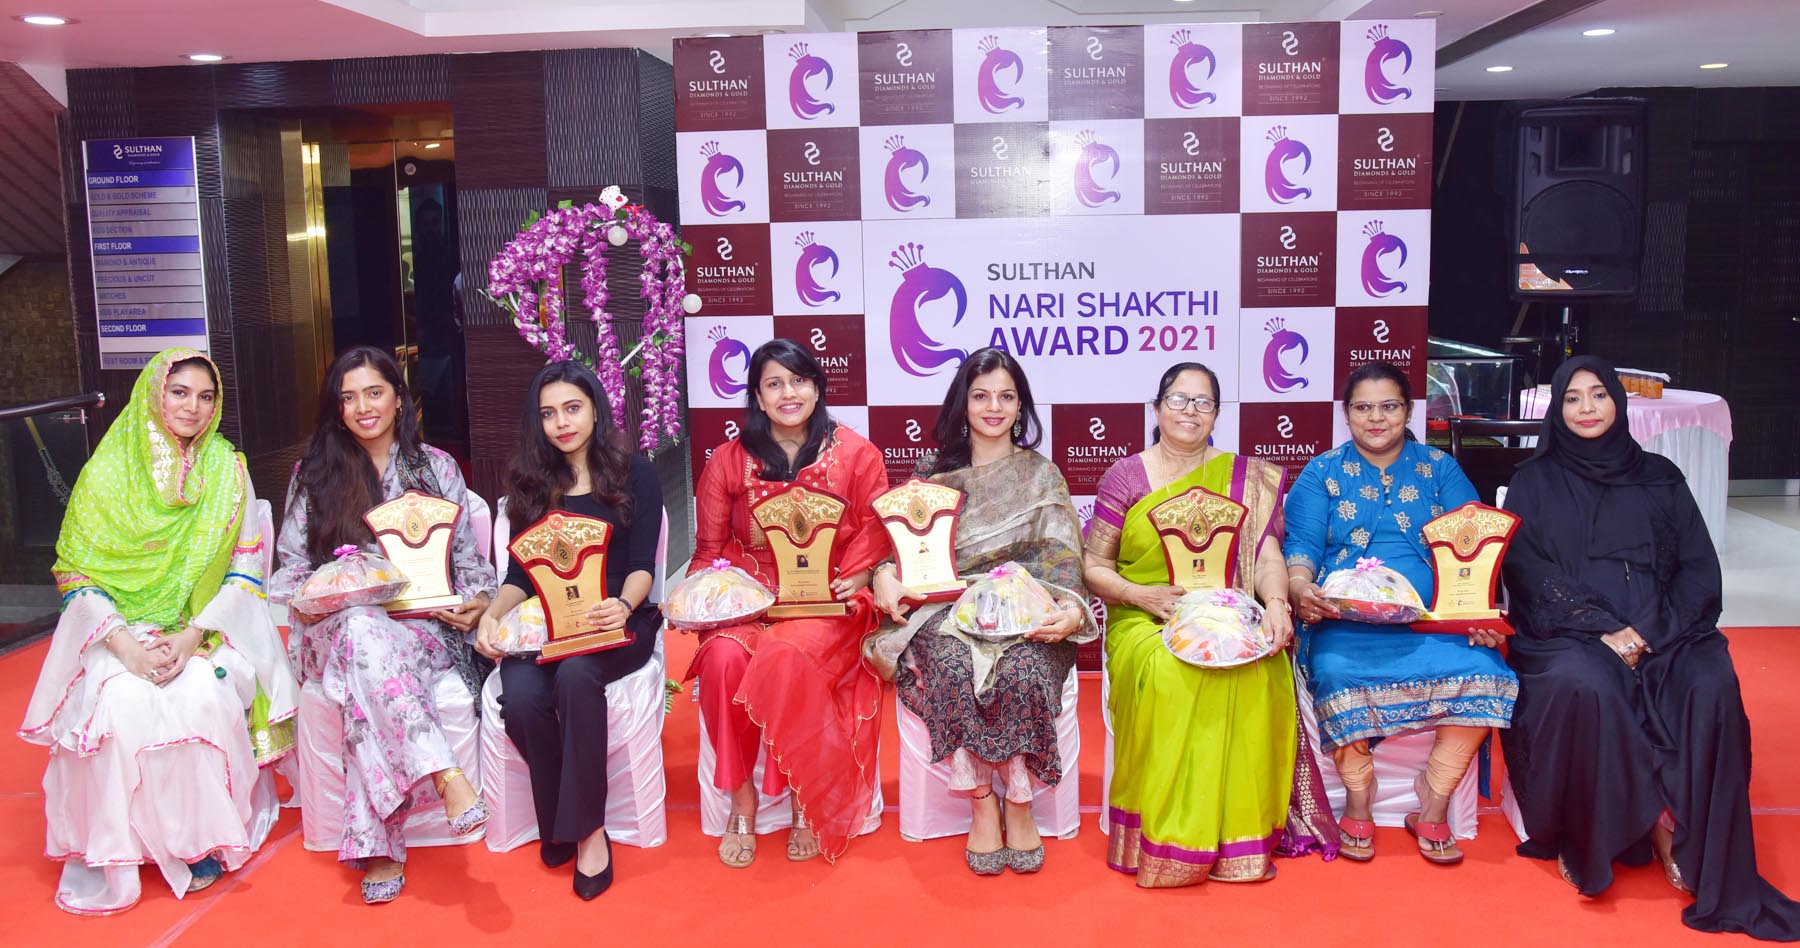 Sulthan Narishakthi Award 2021: Full list of winners